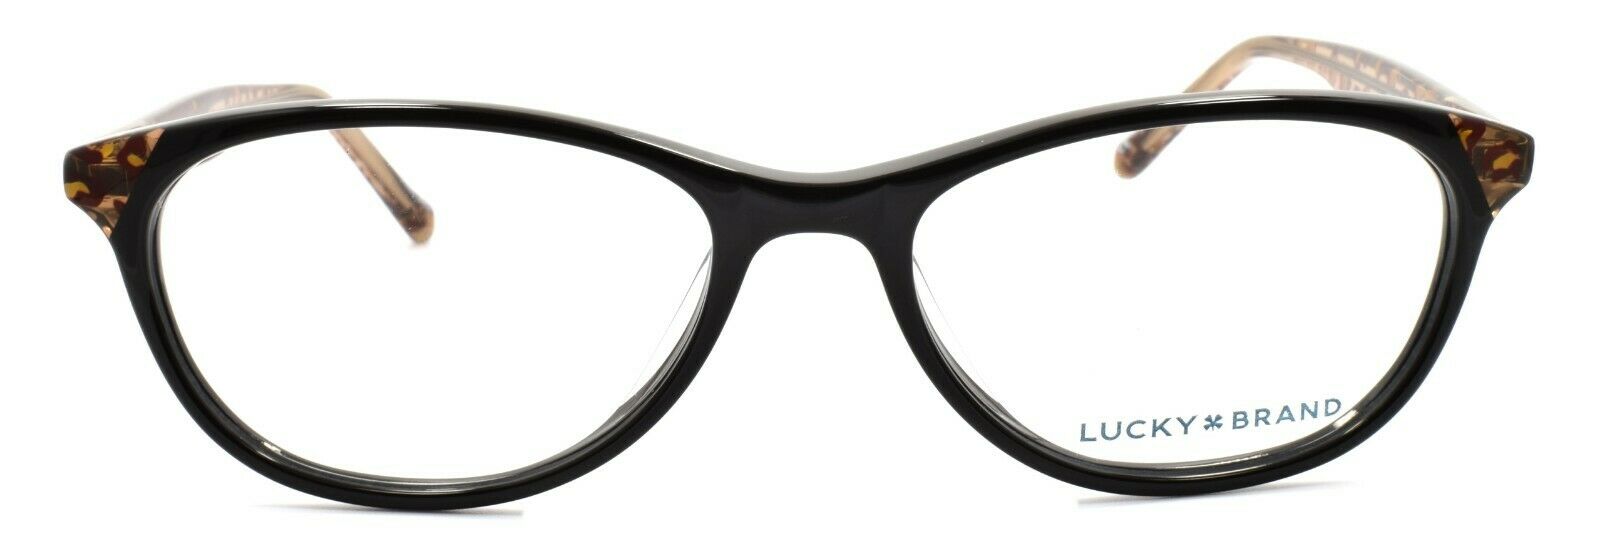 2-LUCKY BRAND D700 Women's Eyeglasses Frames 50-16-135 Black + CASE-751286281941-IKSpecs